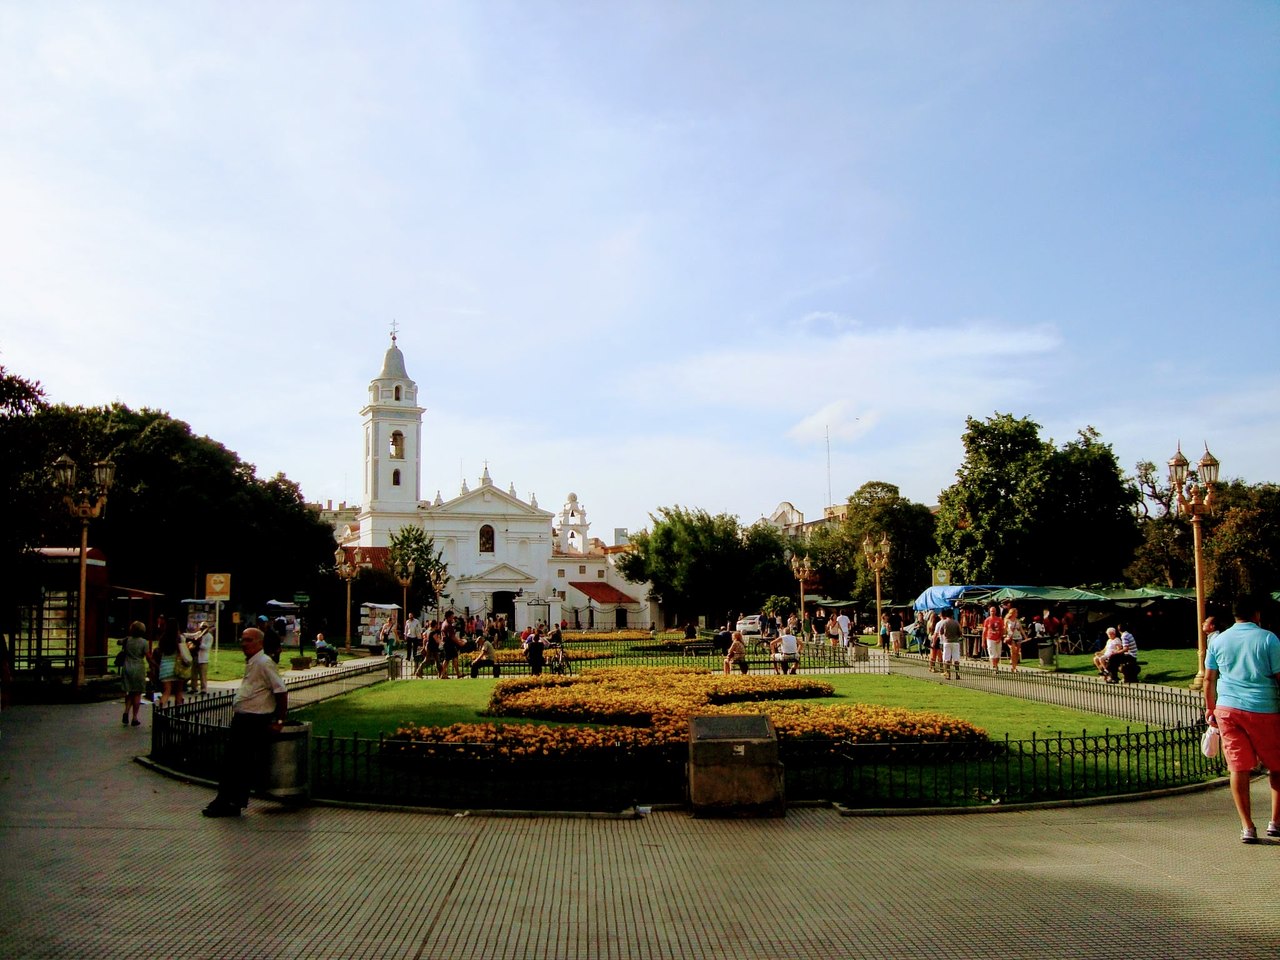 Recoleta - conheça os atrativos turísticos deste bairro de Buenos Aires